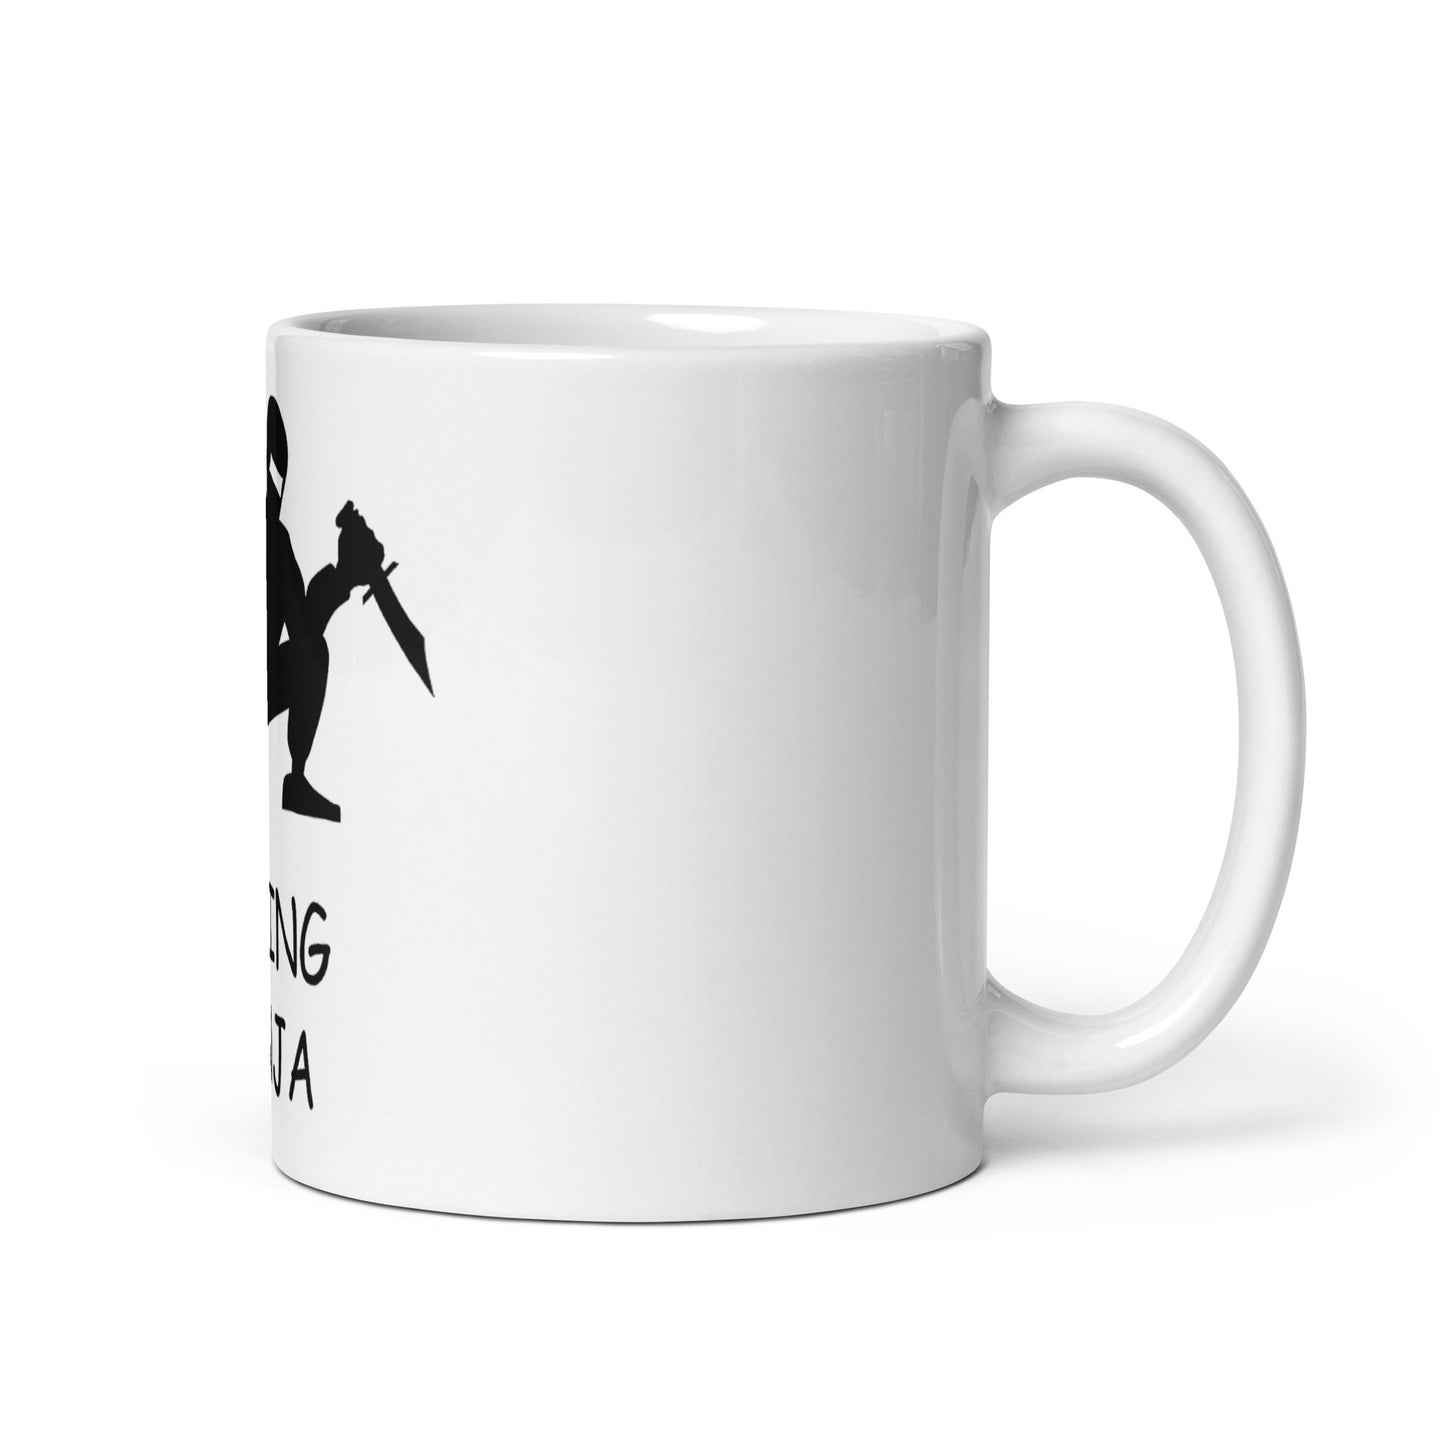 Coding Ninja mug